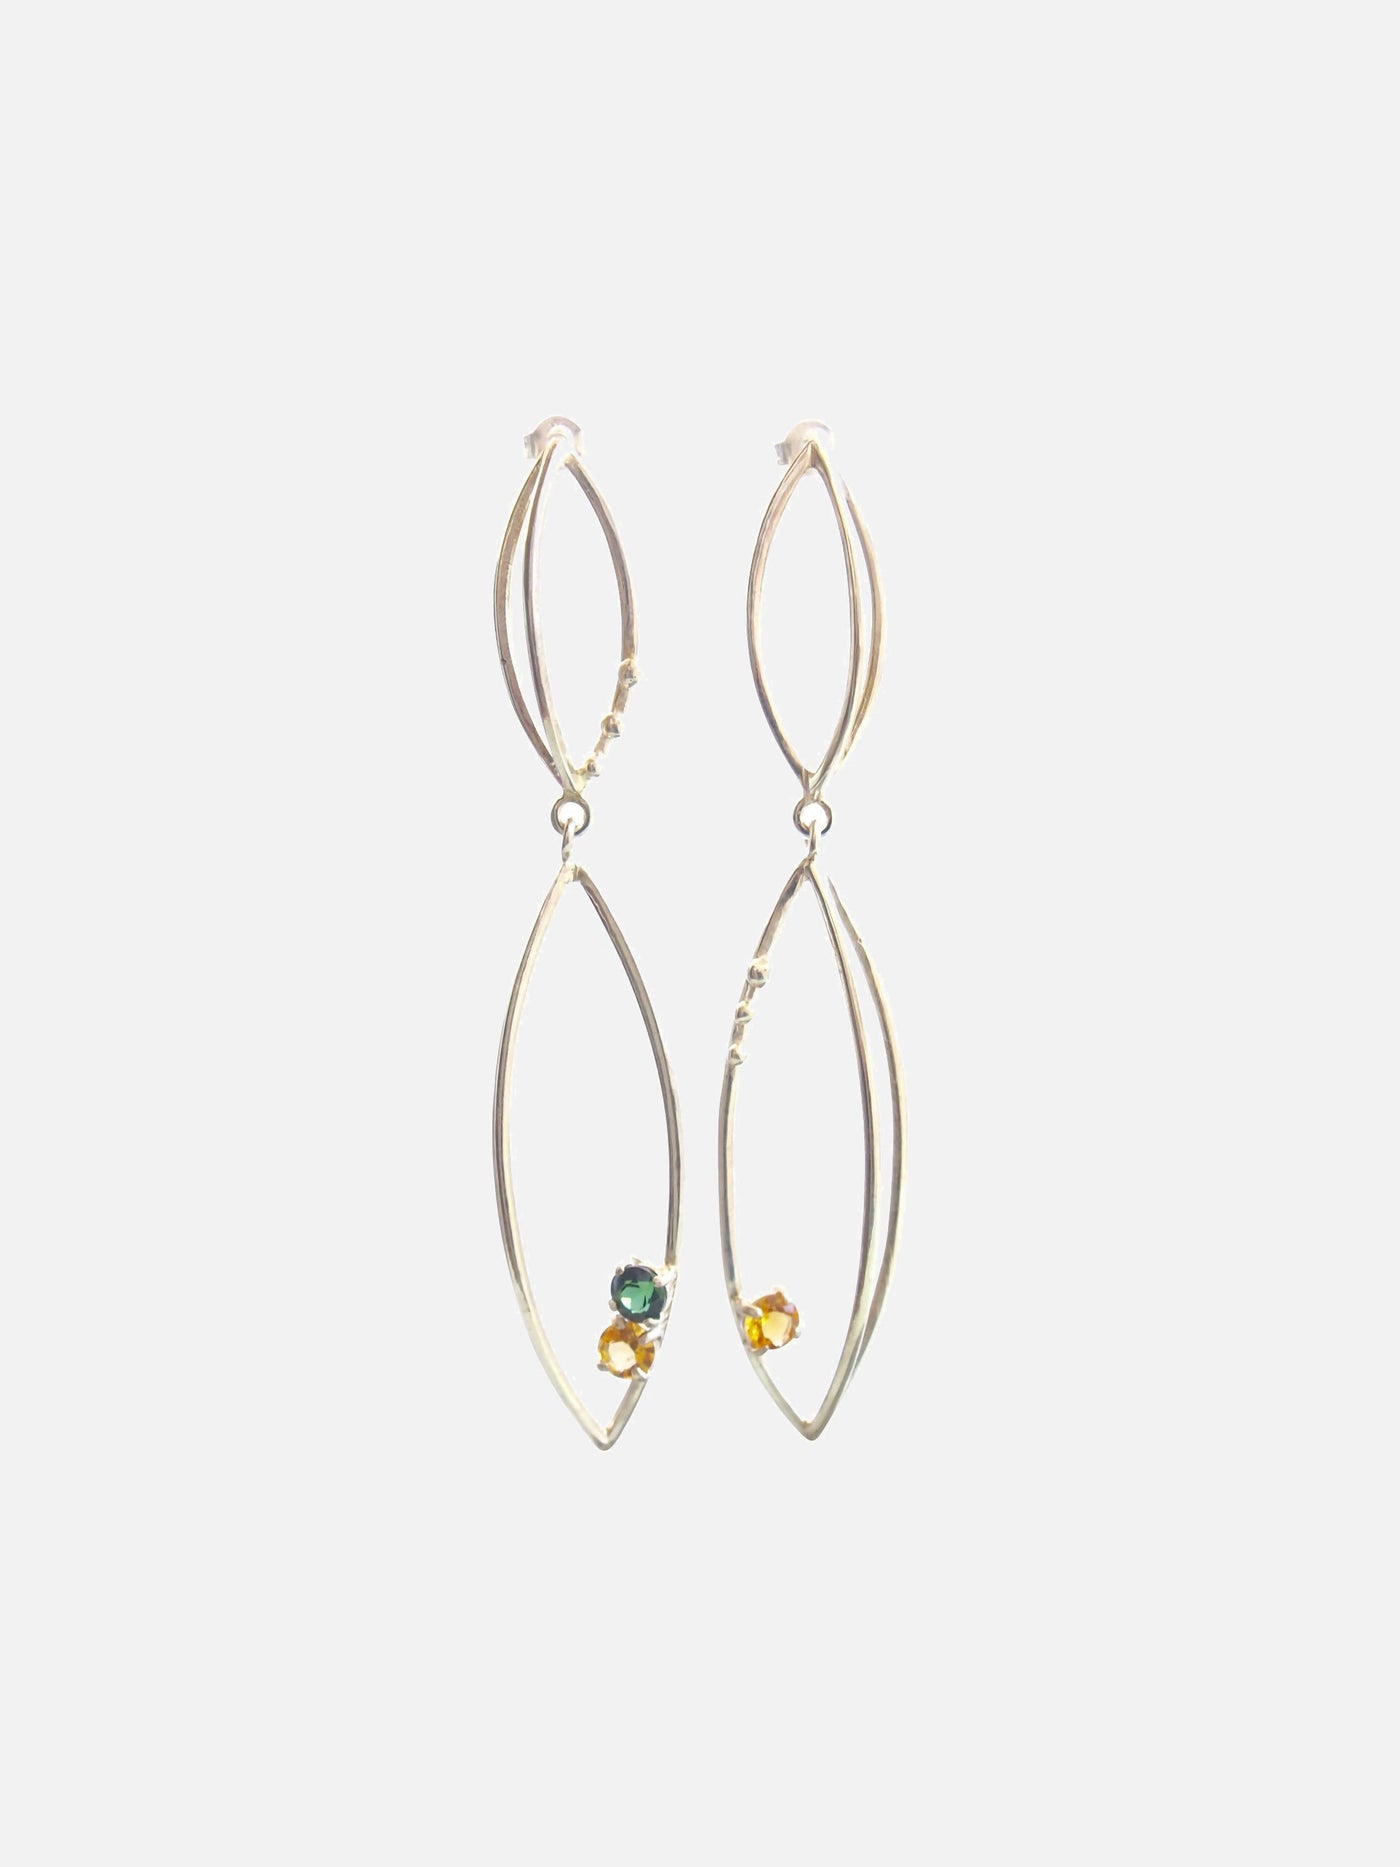 3d earrings with gemstones - Image 1